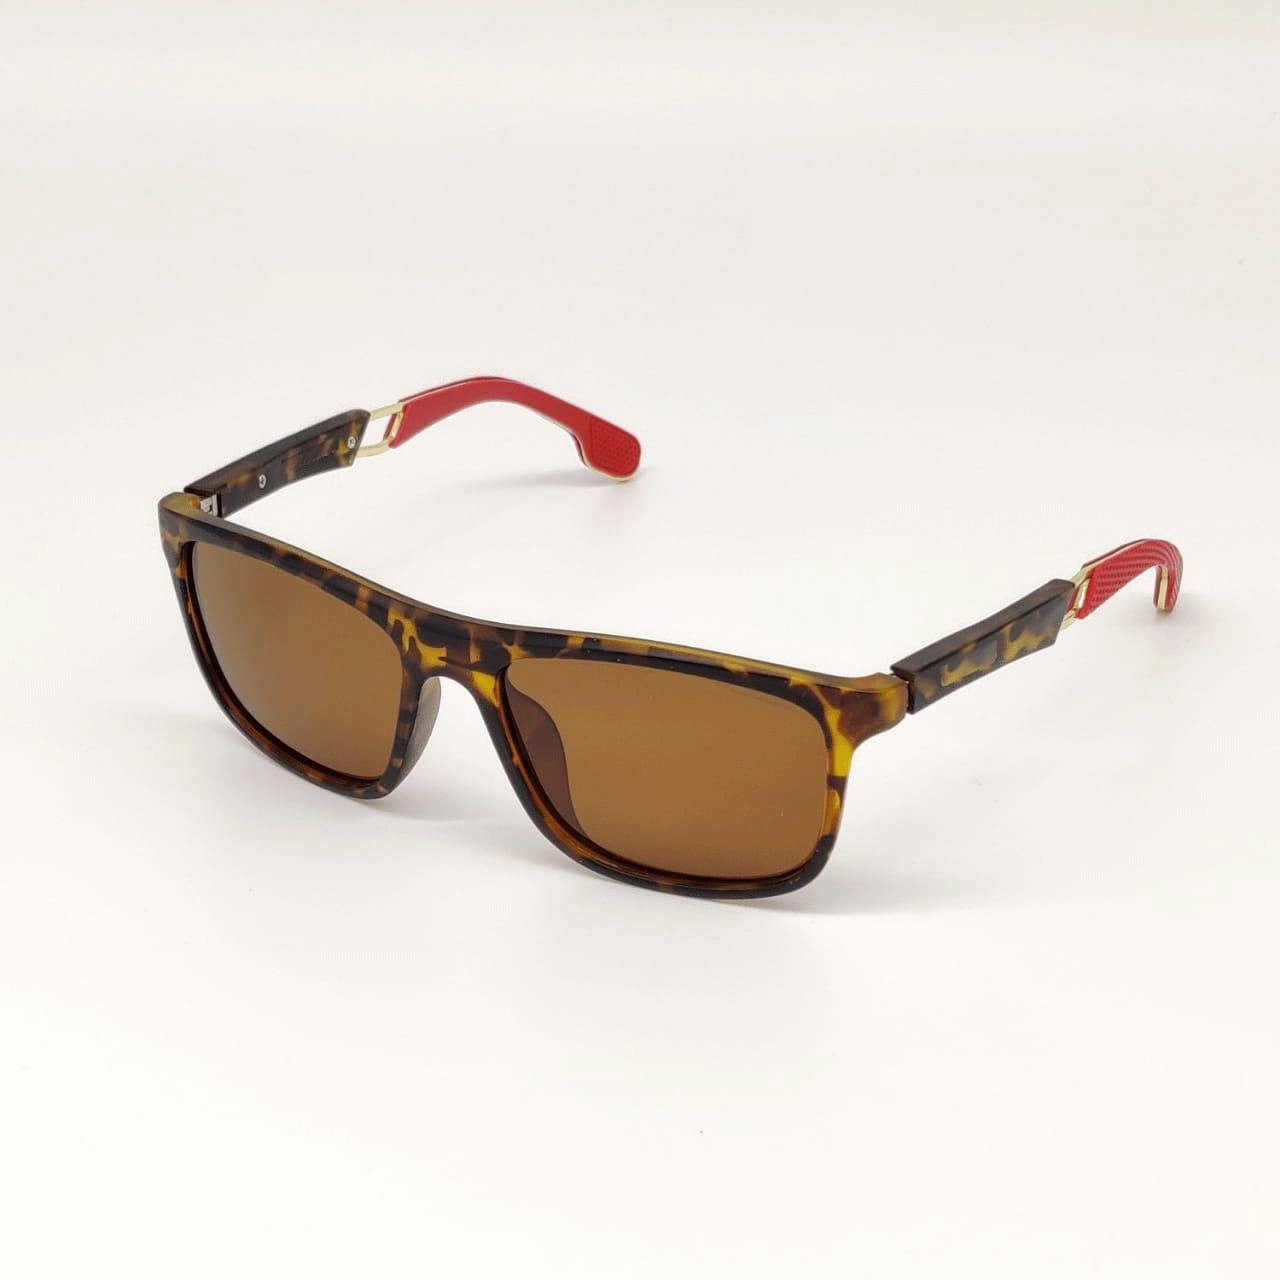 Classic Square Sunglasses For Men And Women-Unique and Classy